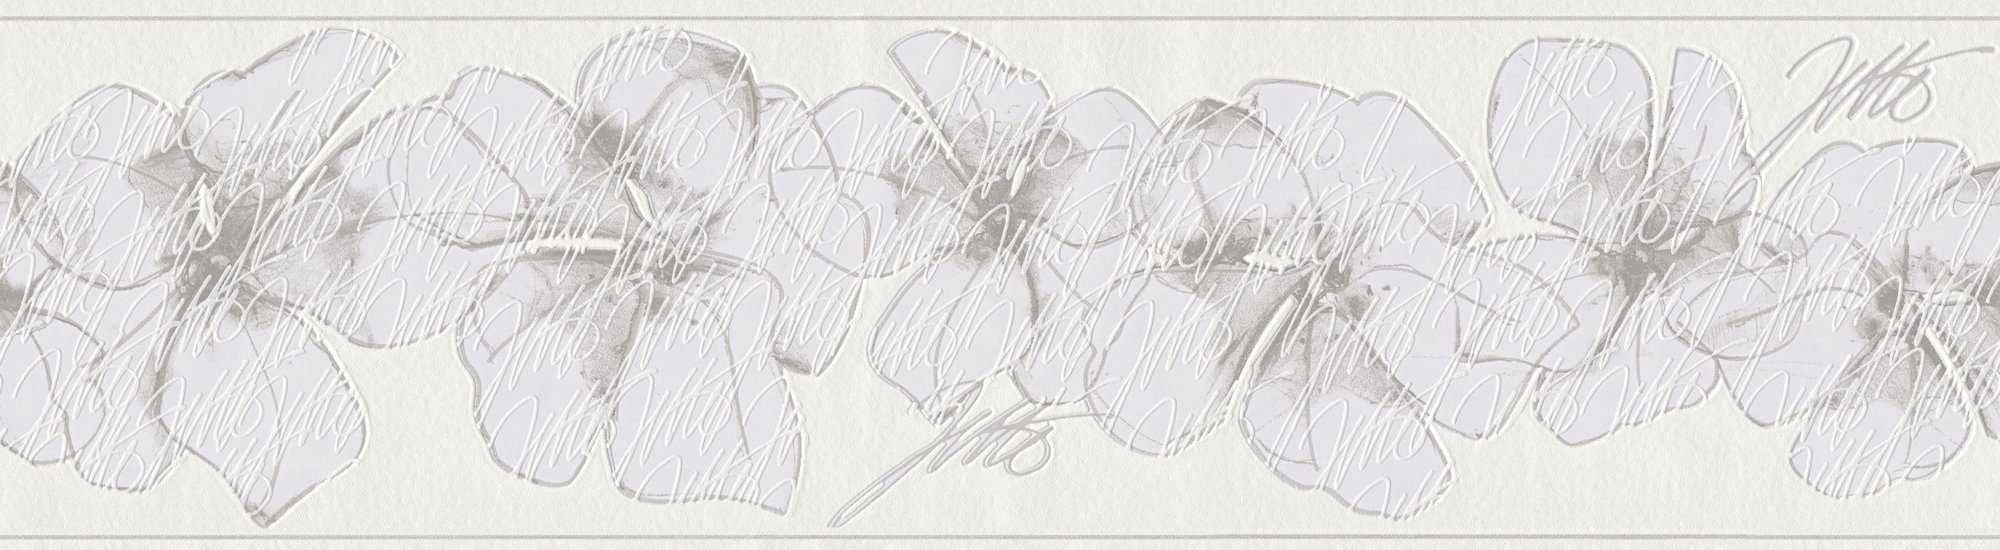 Vinyltapete, Papiertapete Grau Blumentapete A.S. 959913 Wandtapete Blumen Création Tapete